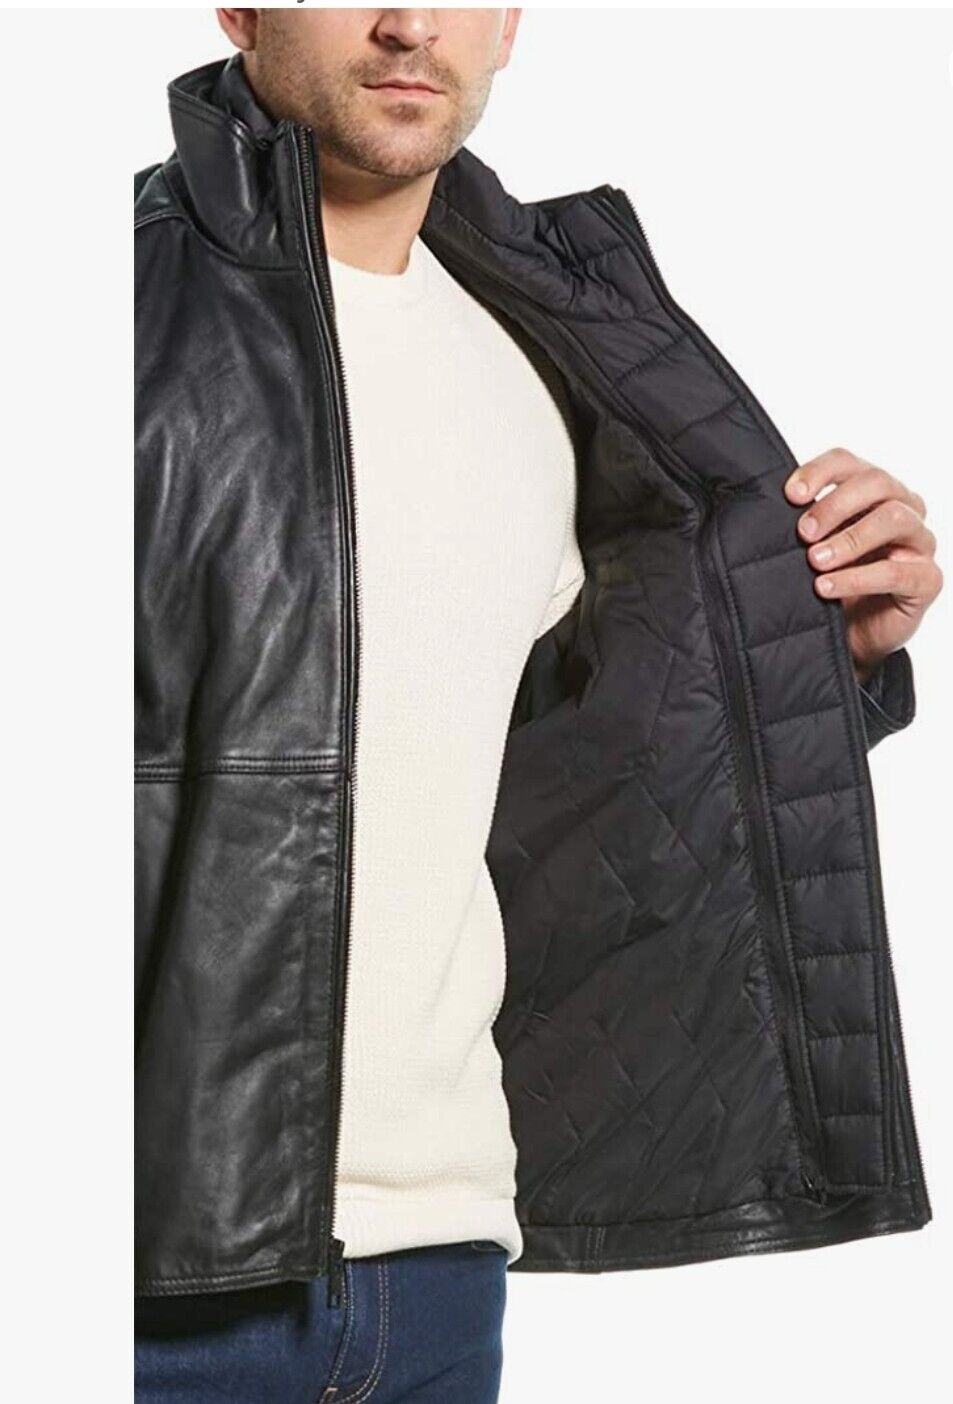 Andrew Marc New York Hartz Mens Black Leather Jacket Size Medium, RRP £ ...